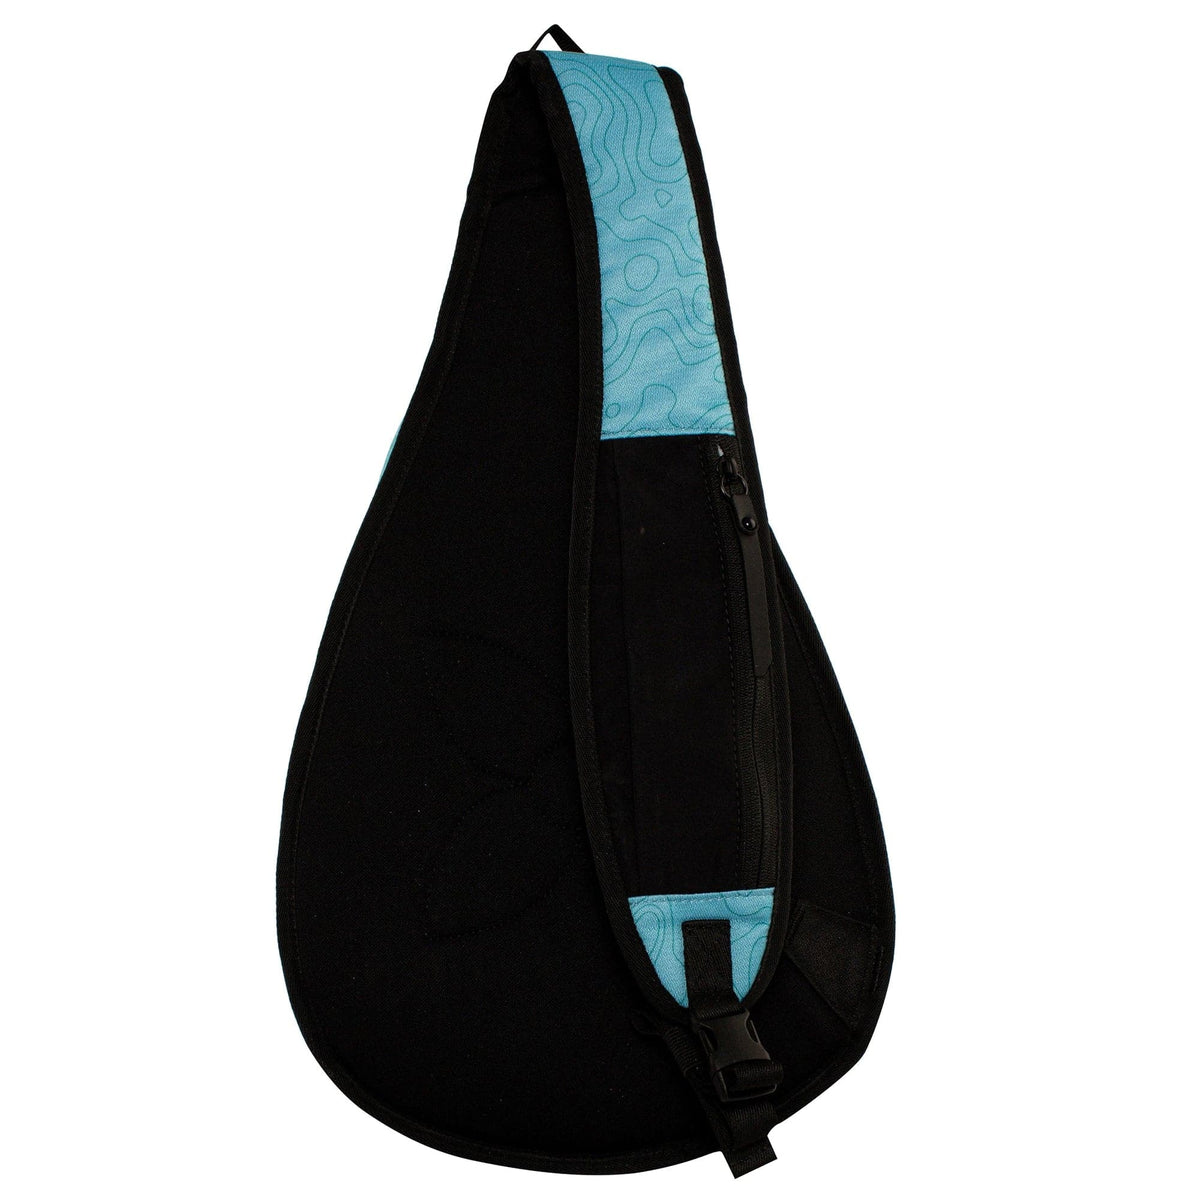 Sherpani Essentials Esprit Sling Backpack